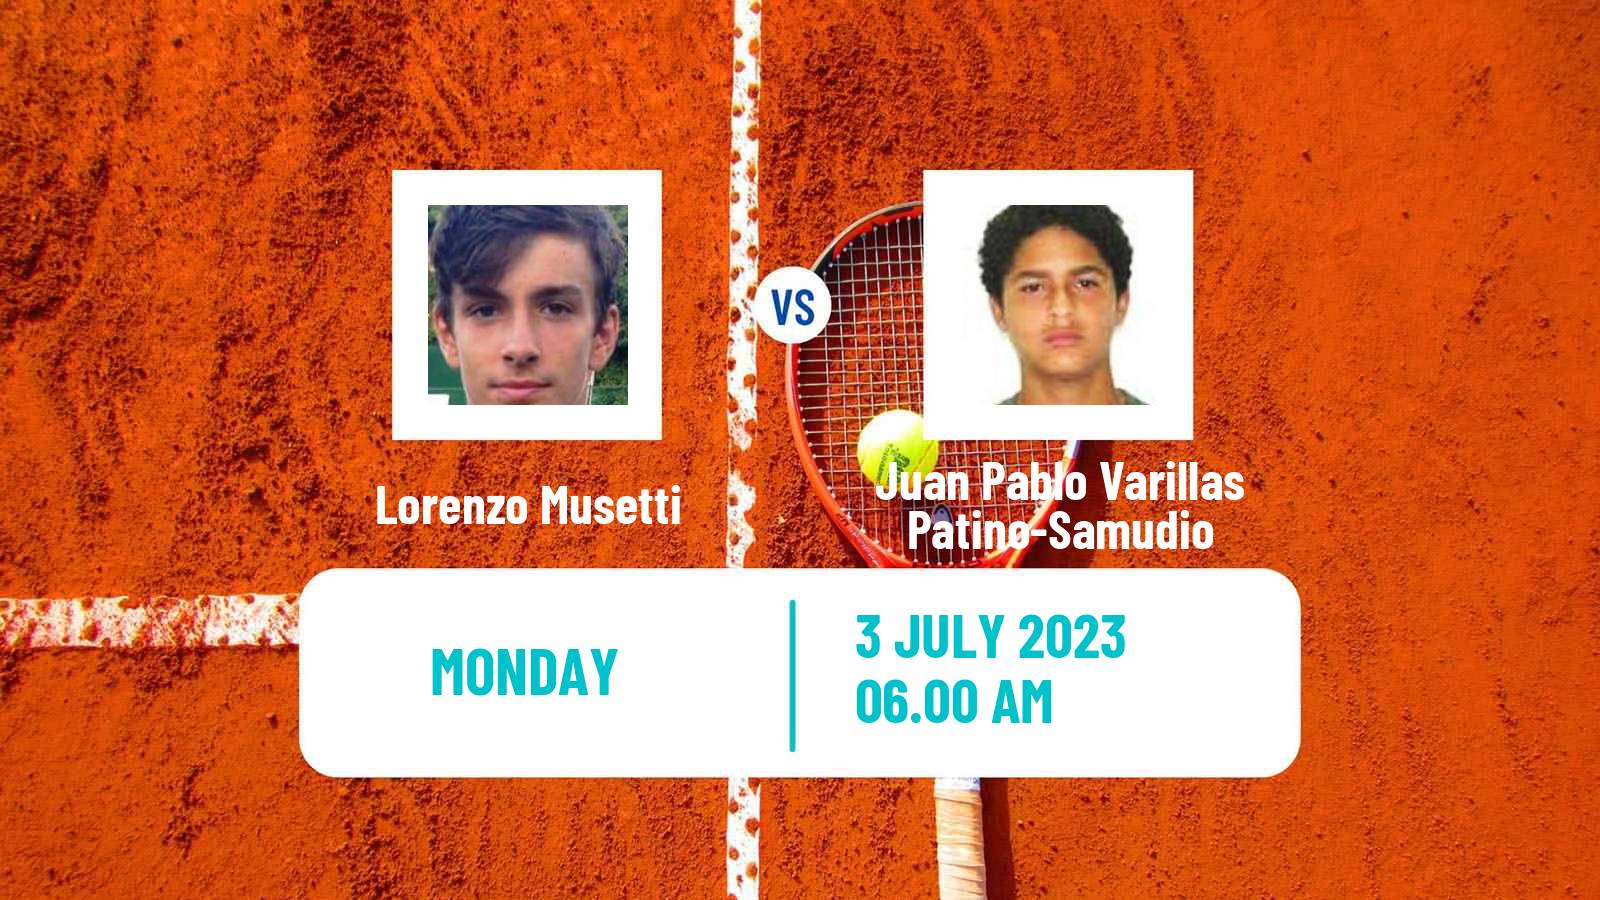 Tennis ATP Wimbledon Lorenzo Musetti - Juan Pablo Varillas Patino-Samudio